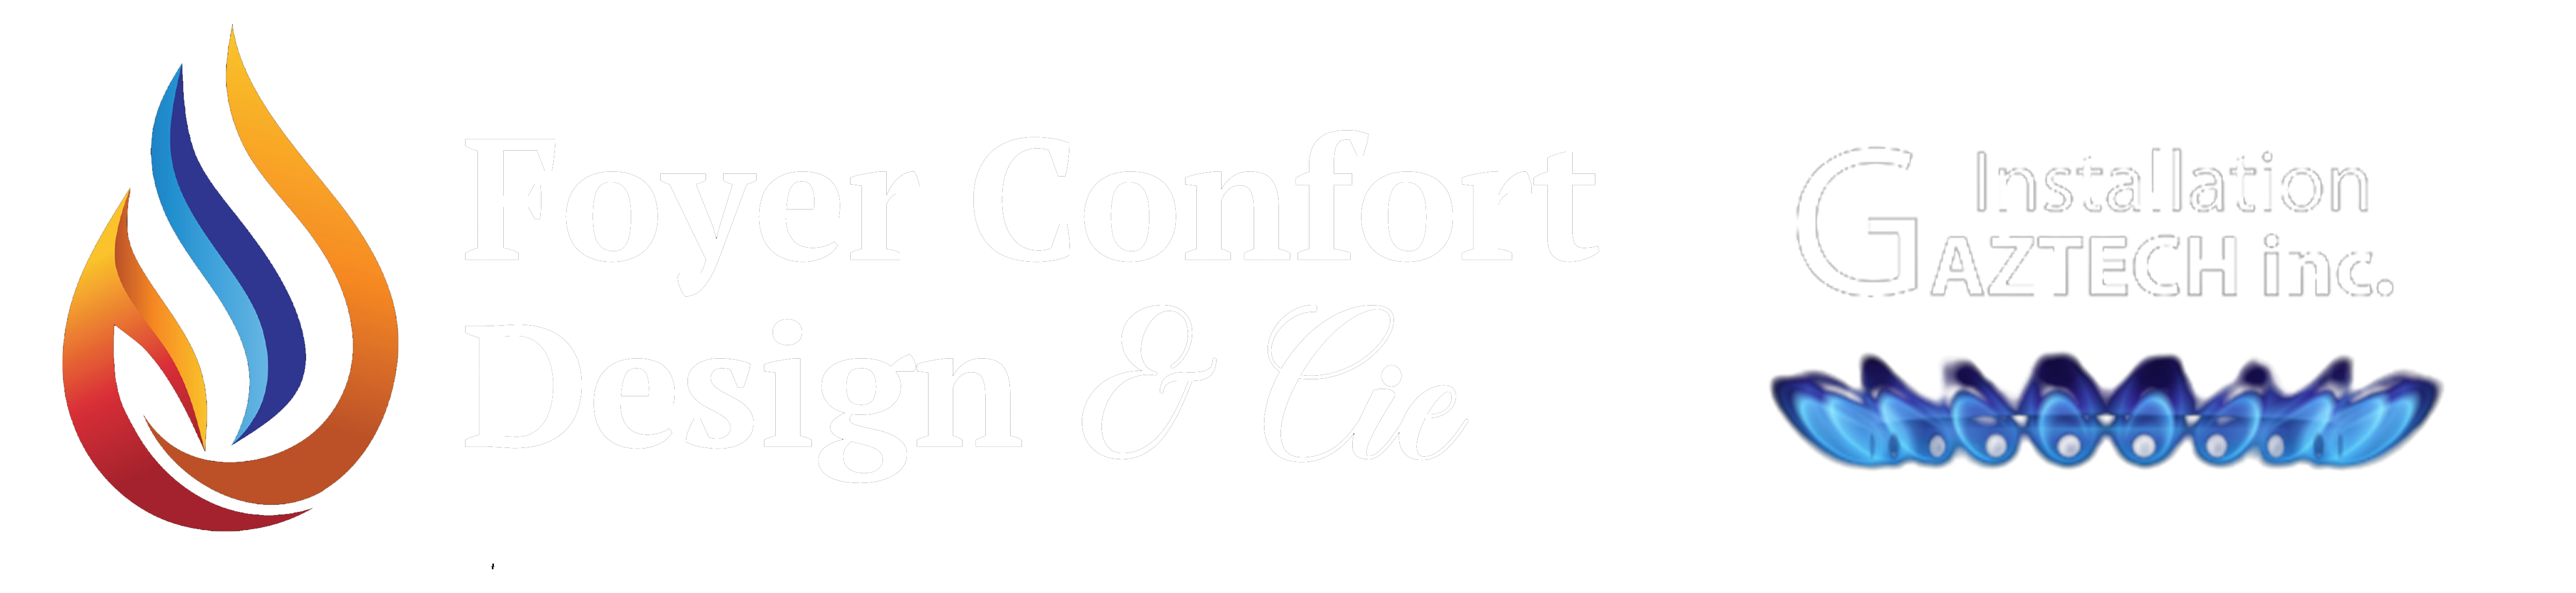 Foyer Confort Design & Cie